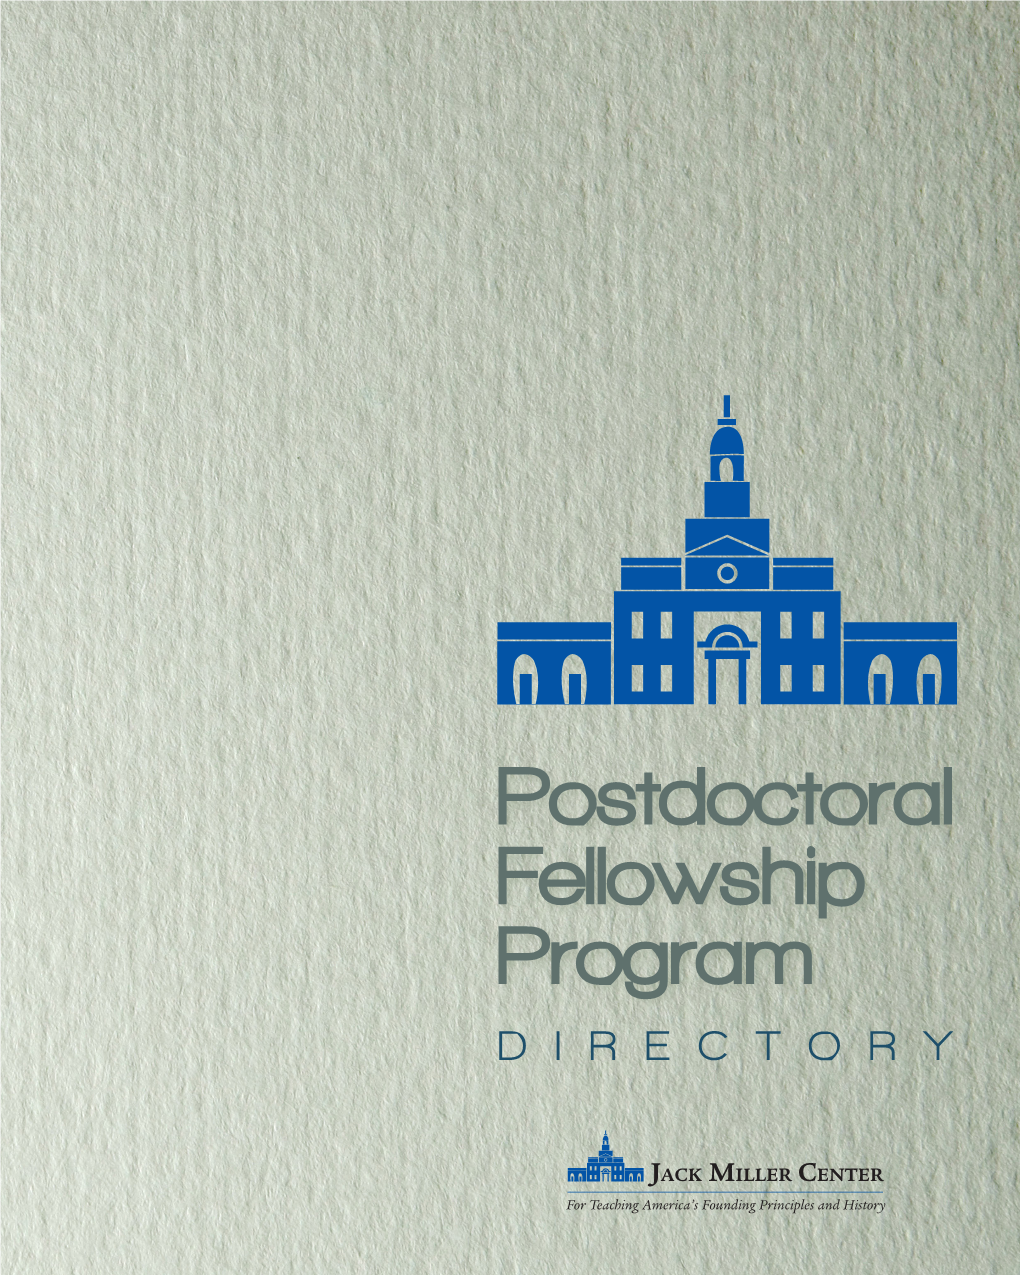 Postdoctoral Fellowship Program DIRECTORY